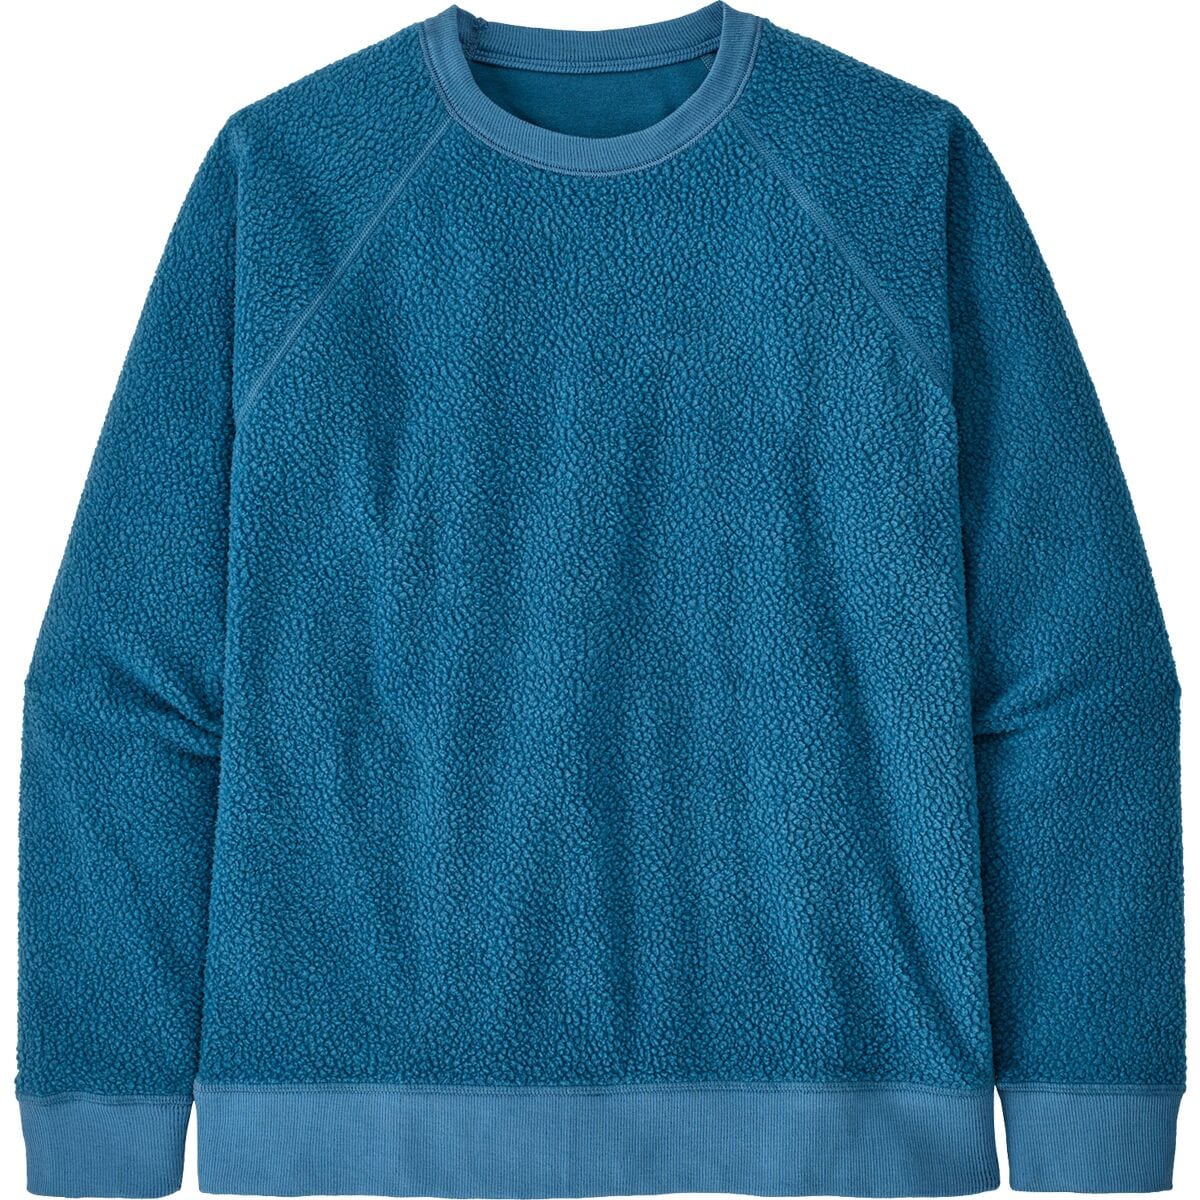 Patagonia Reversible Shearling Crew Sweatshirt - Men's Wavy Blue, XL